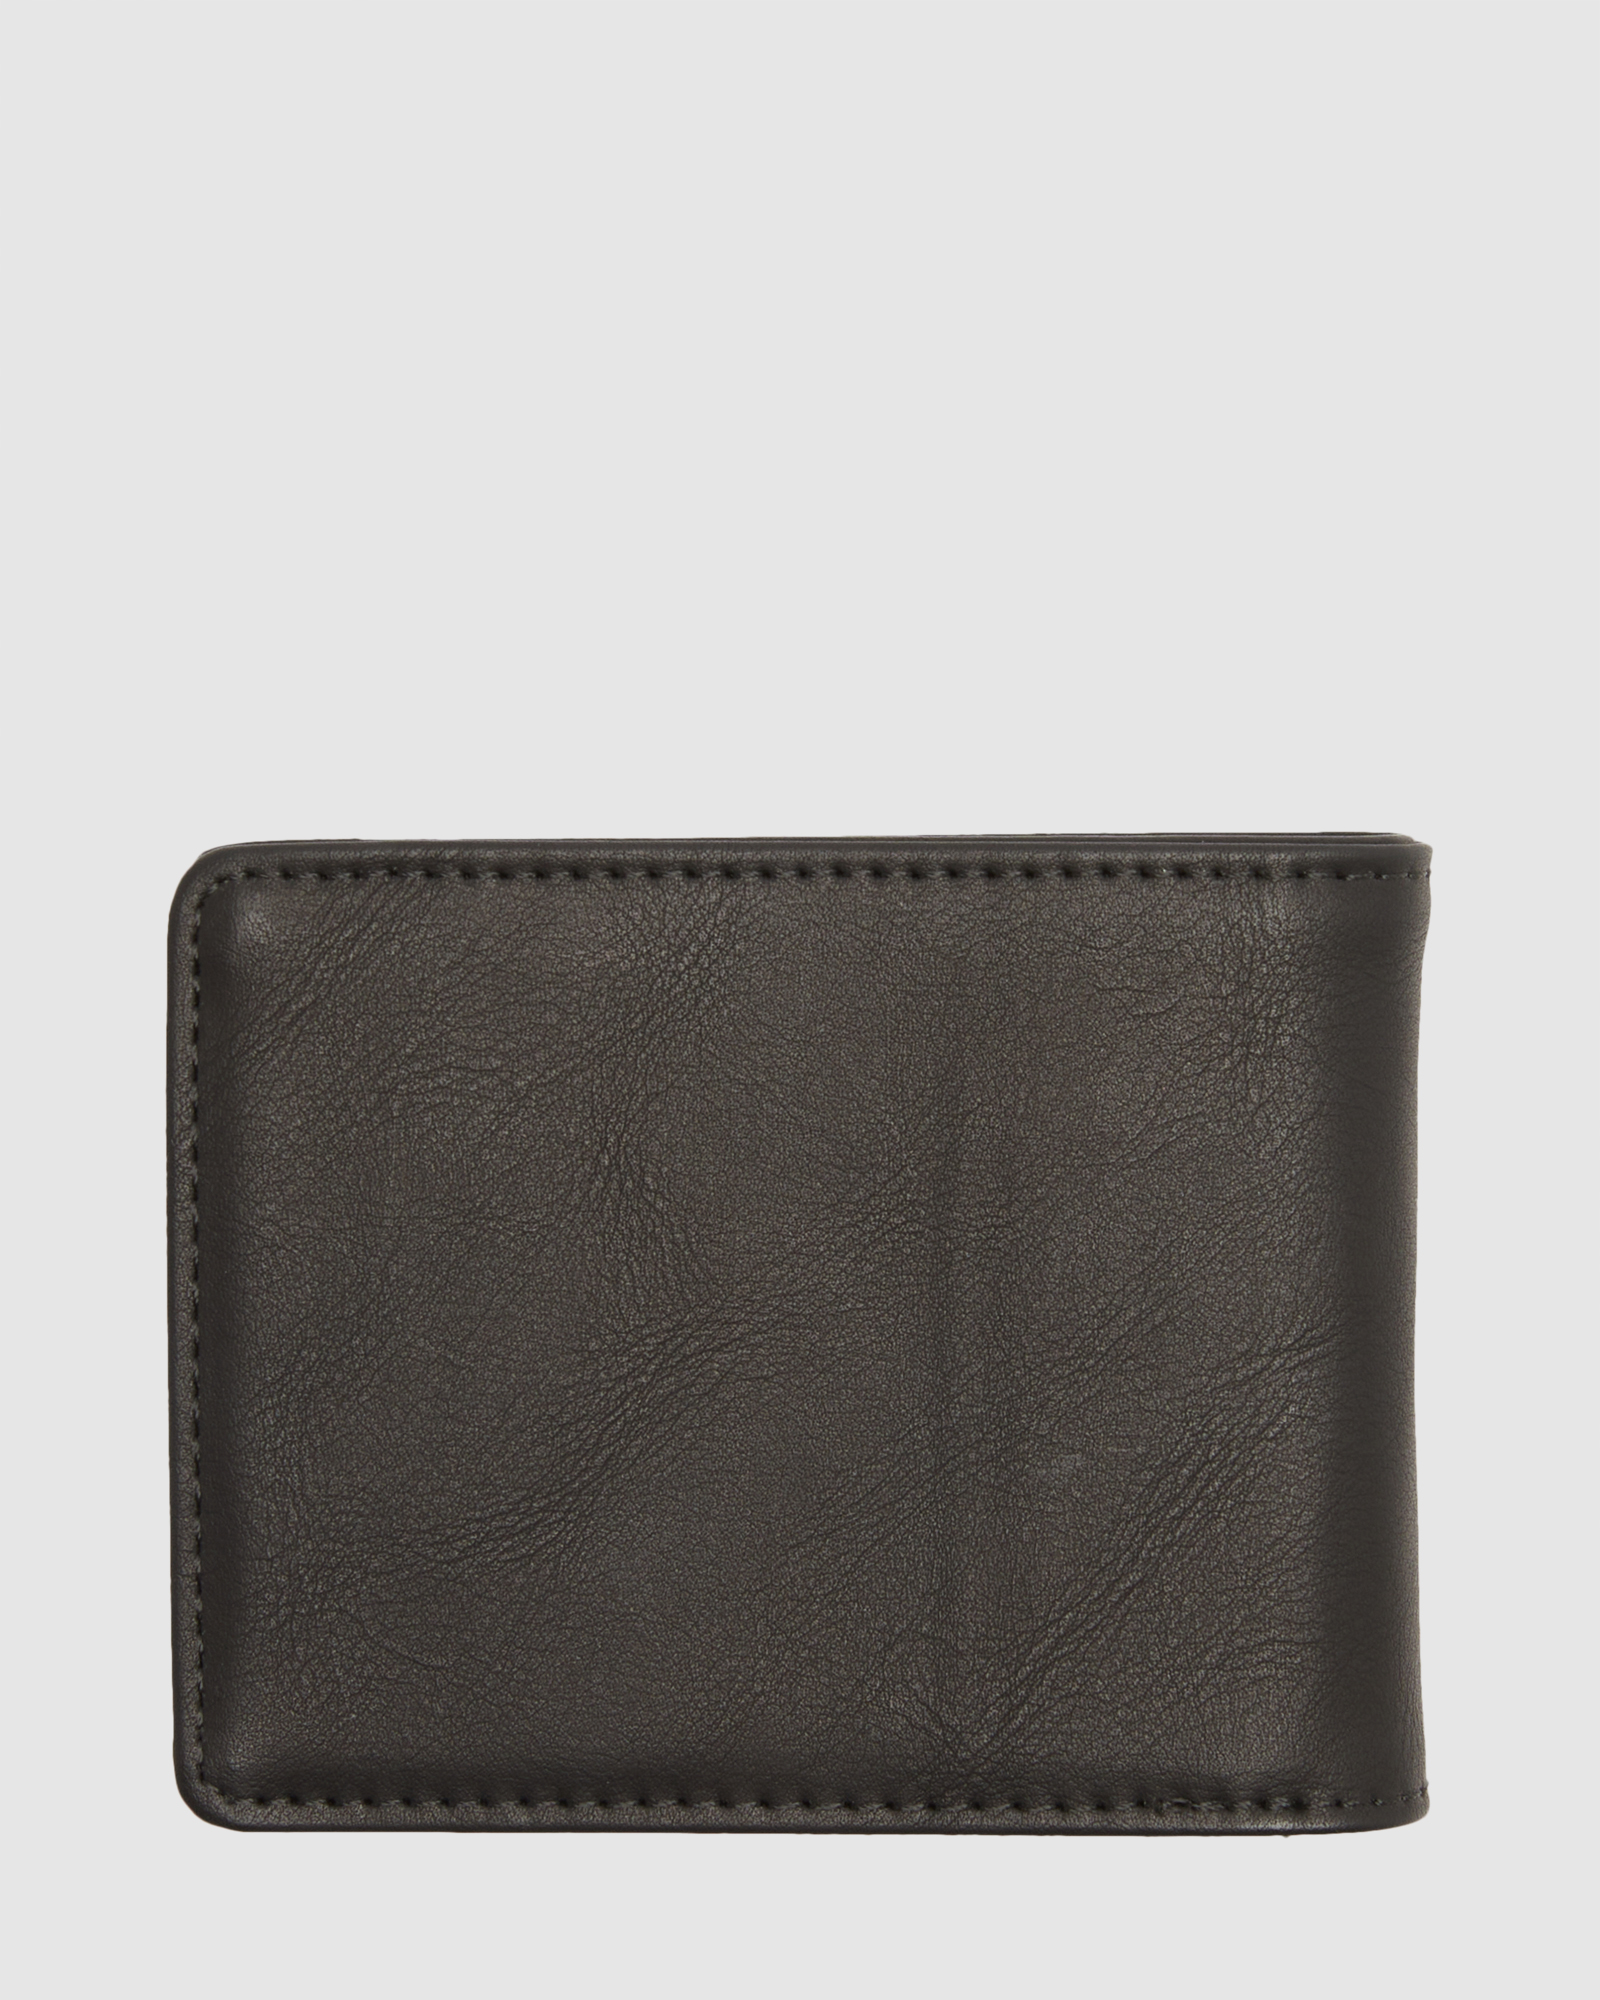 Quiksilver Triple Parch Tri-Fold Wallet Black Size M